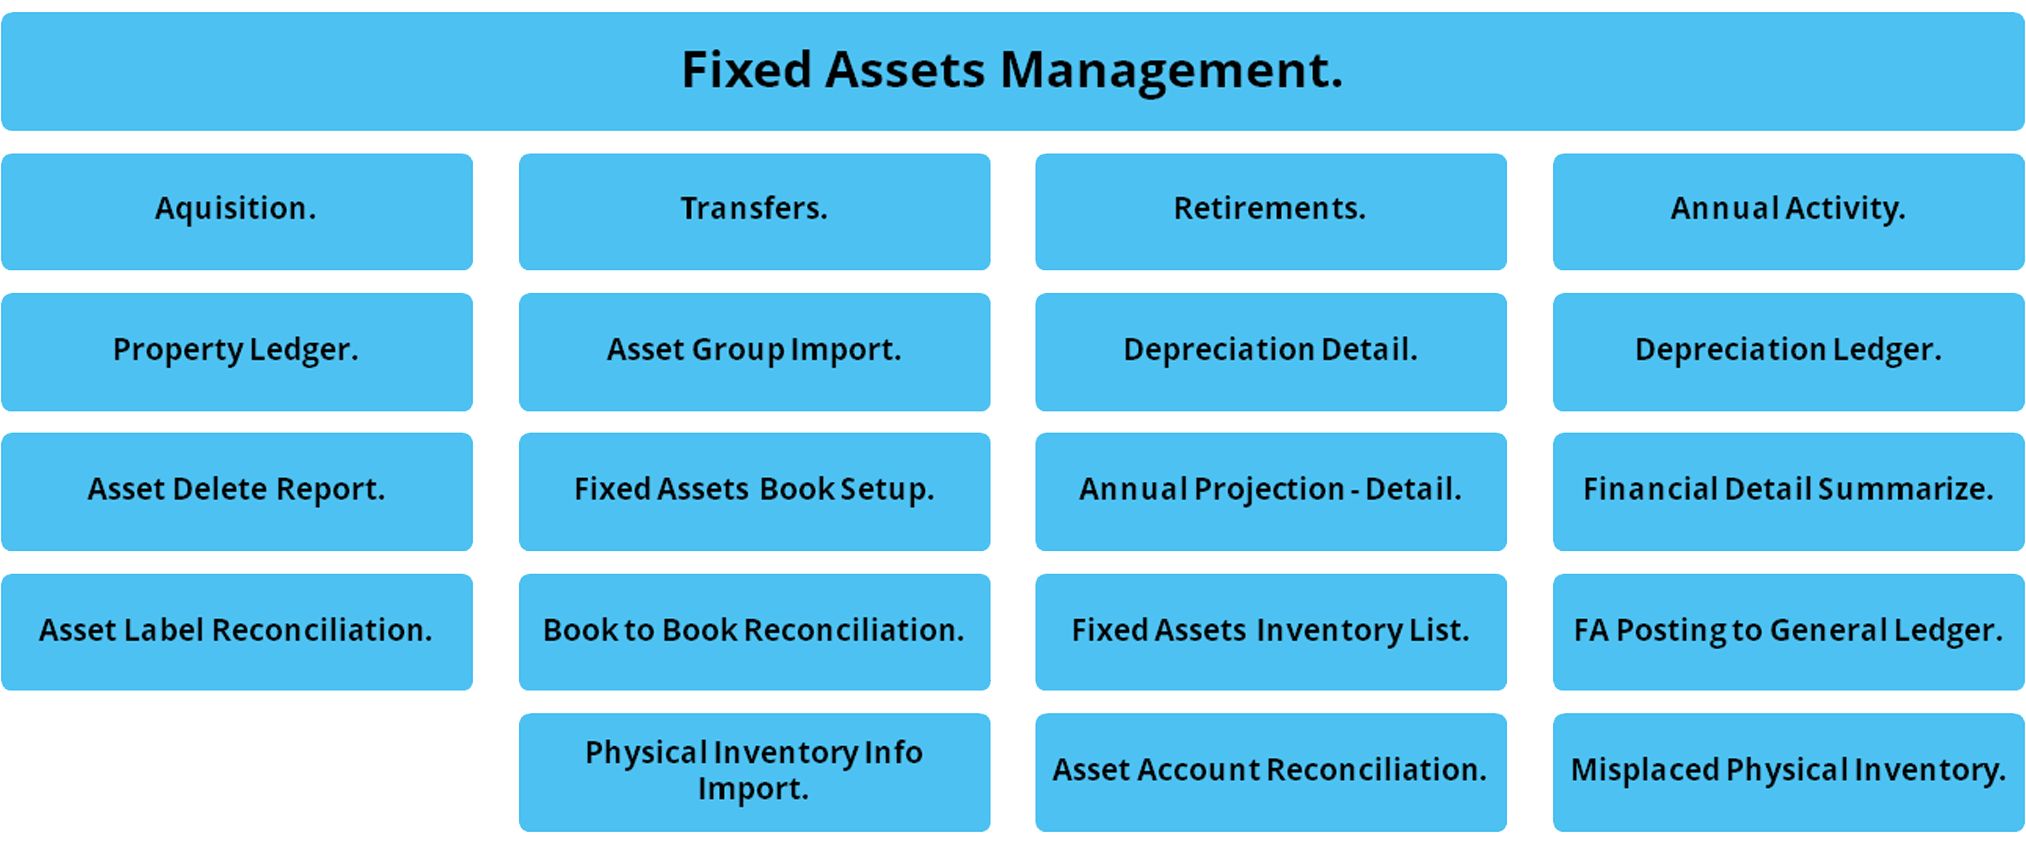 Fixed assets management